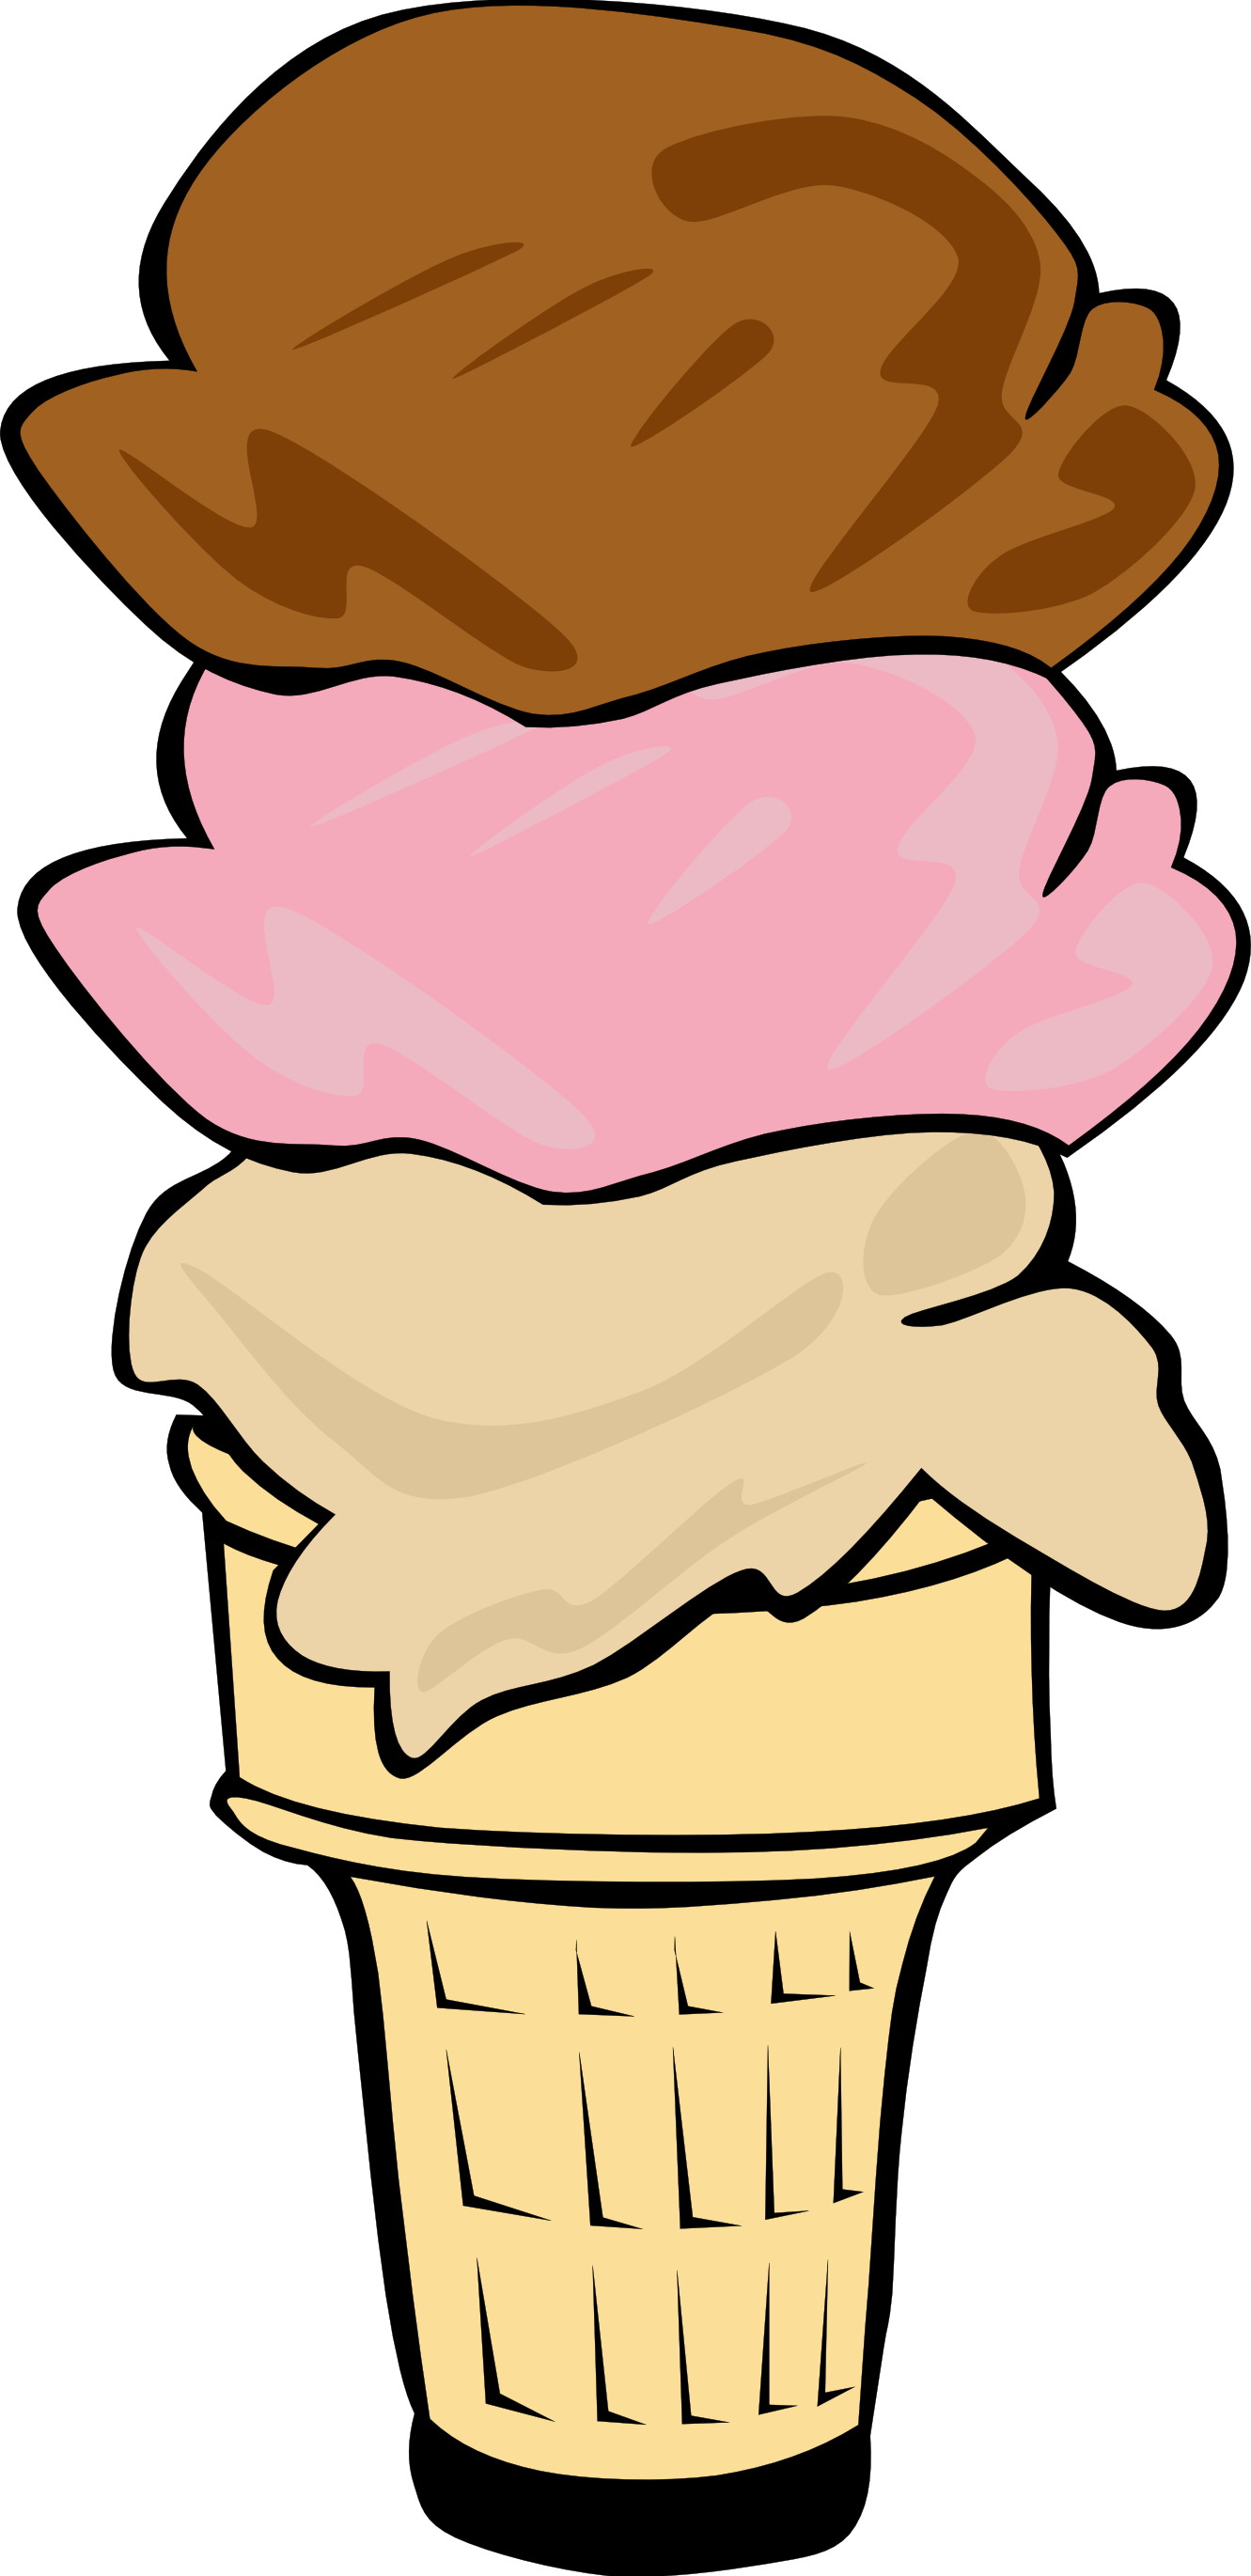 free-ice-cream-scoop-clipart-black-and-white-download-free-ice-cream